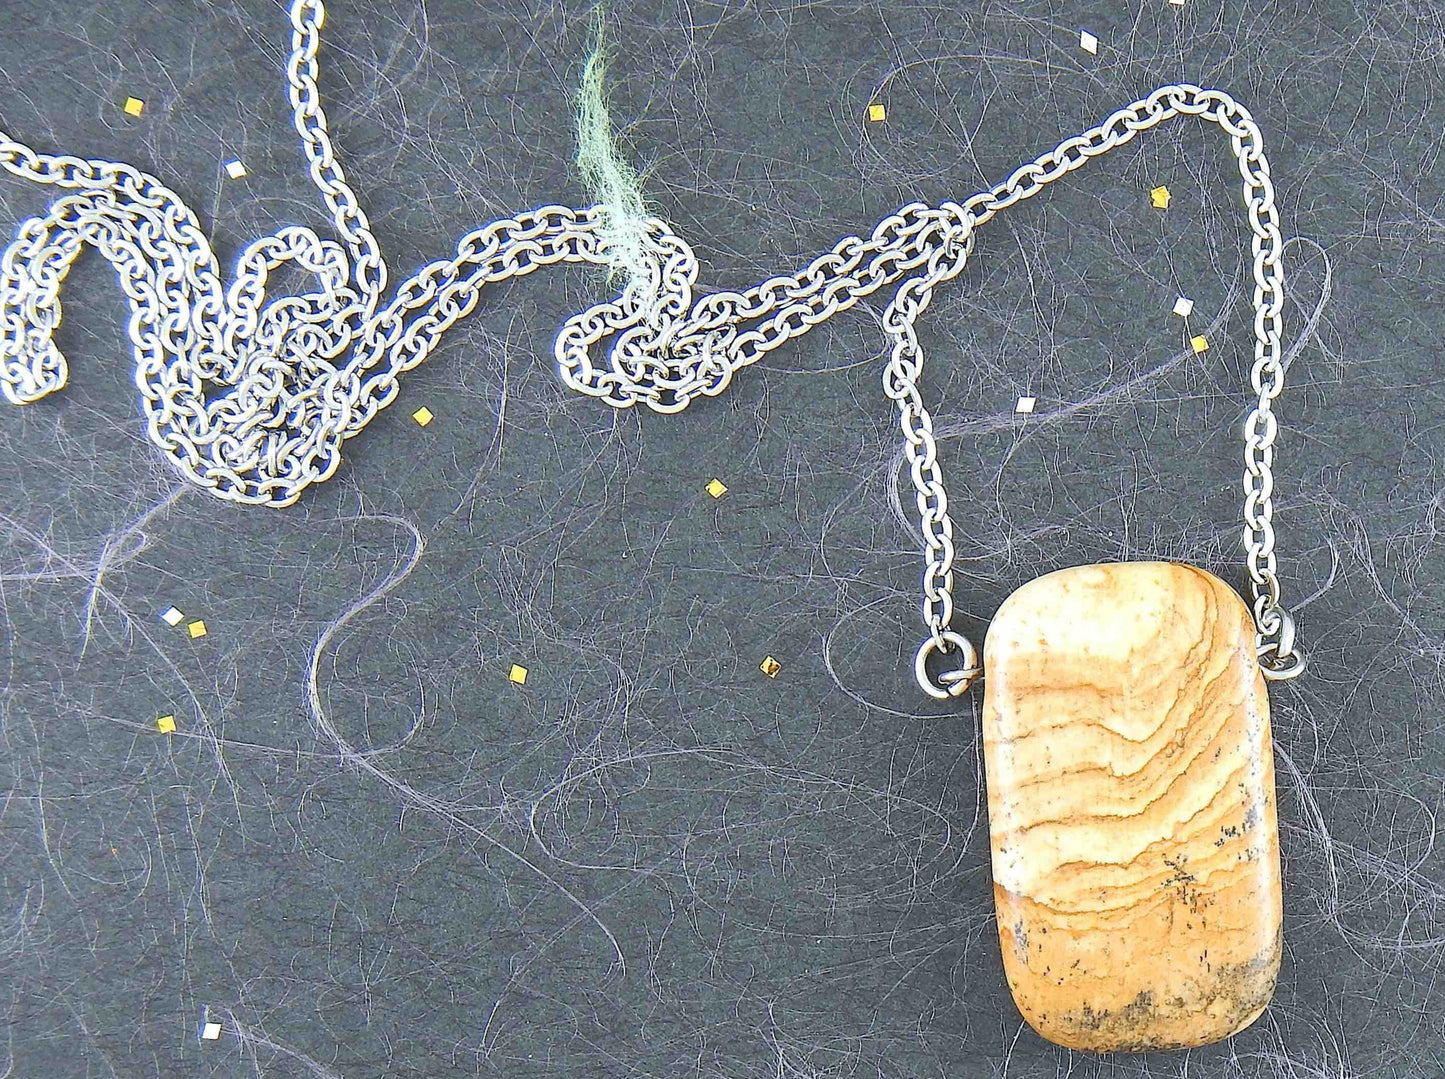 26-inch necklace with rectangular light caramel landscape jasper stone pendant, stainless steel chain